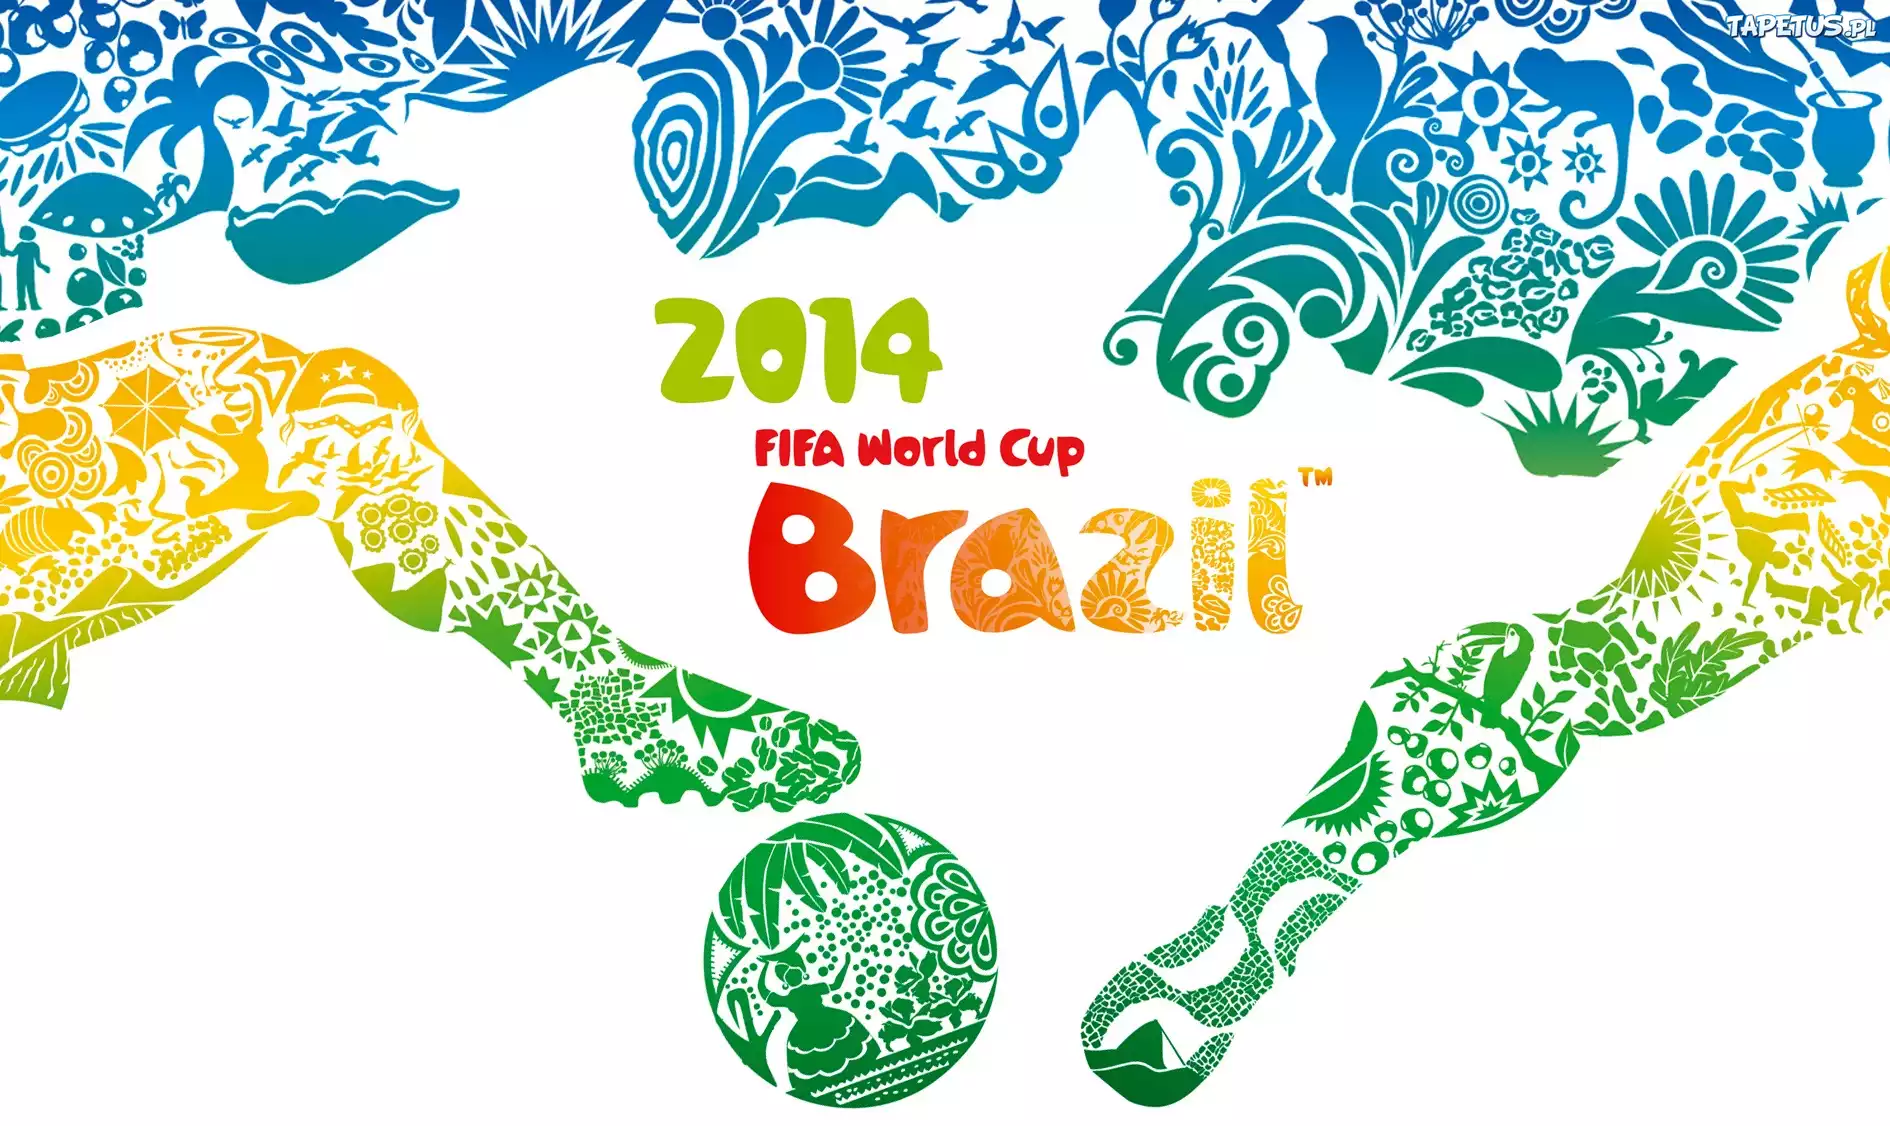 World cup 2014. FIFA World Cup 2014. ФИФА 2014 Бразилия.